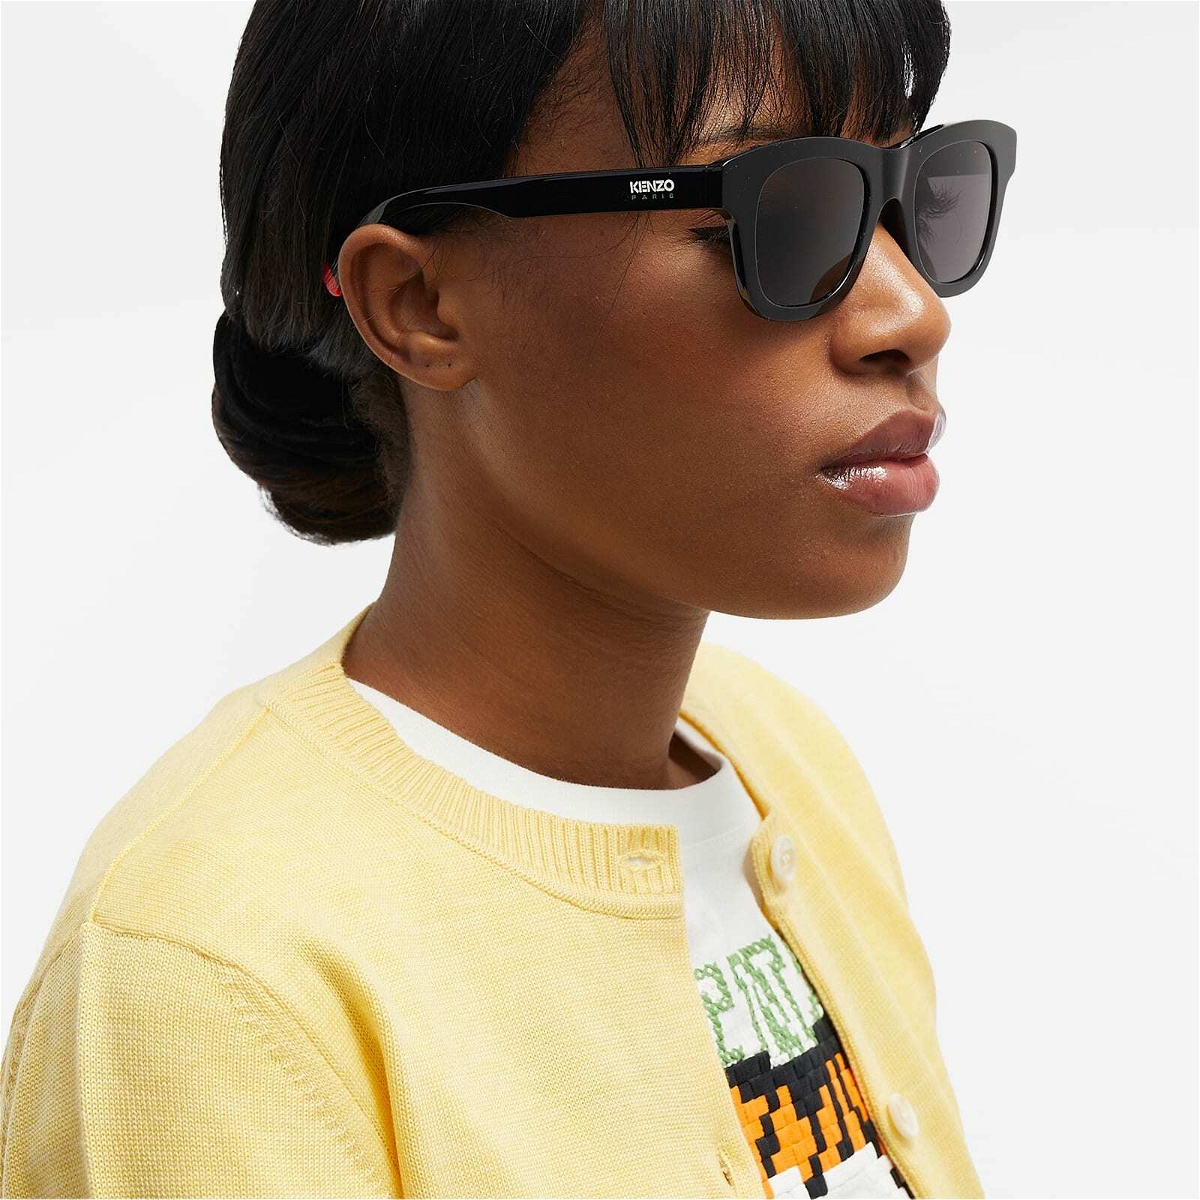 Kenzo Eyewear Women's AKA Sunglasses in Shiny Black/Smoke Kenzo